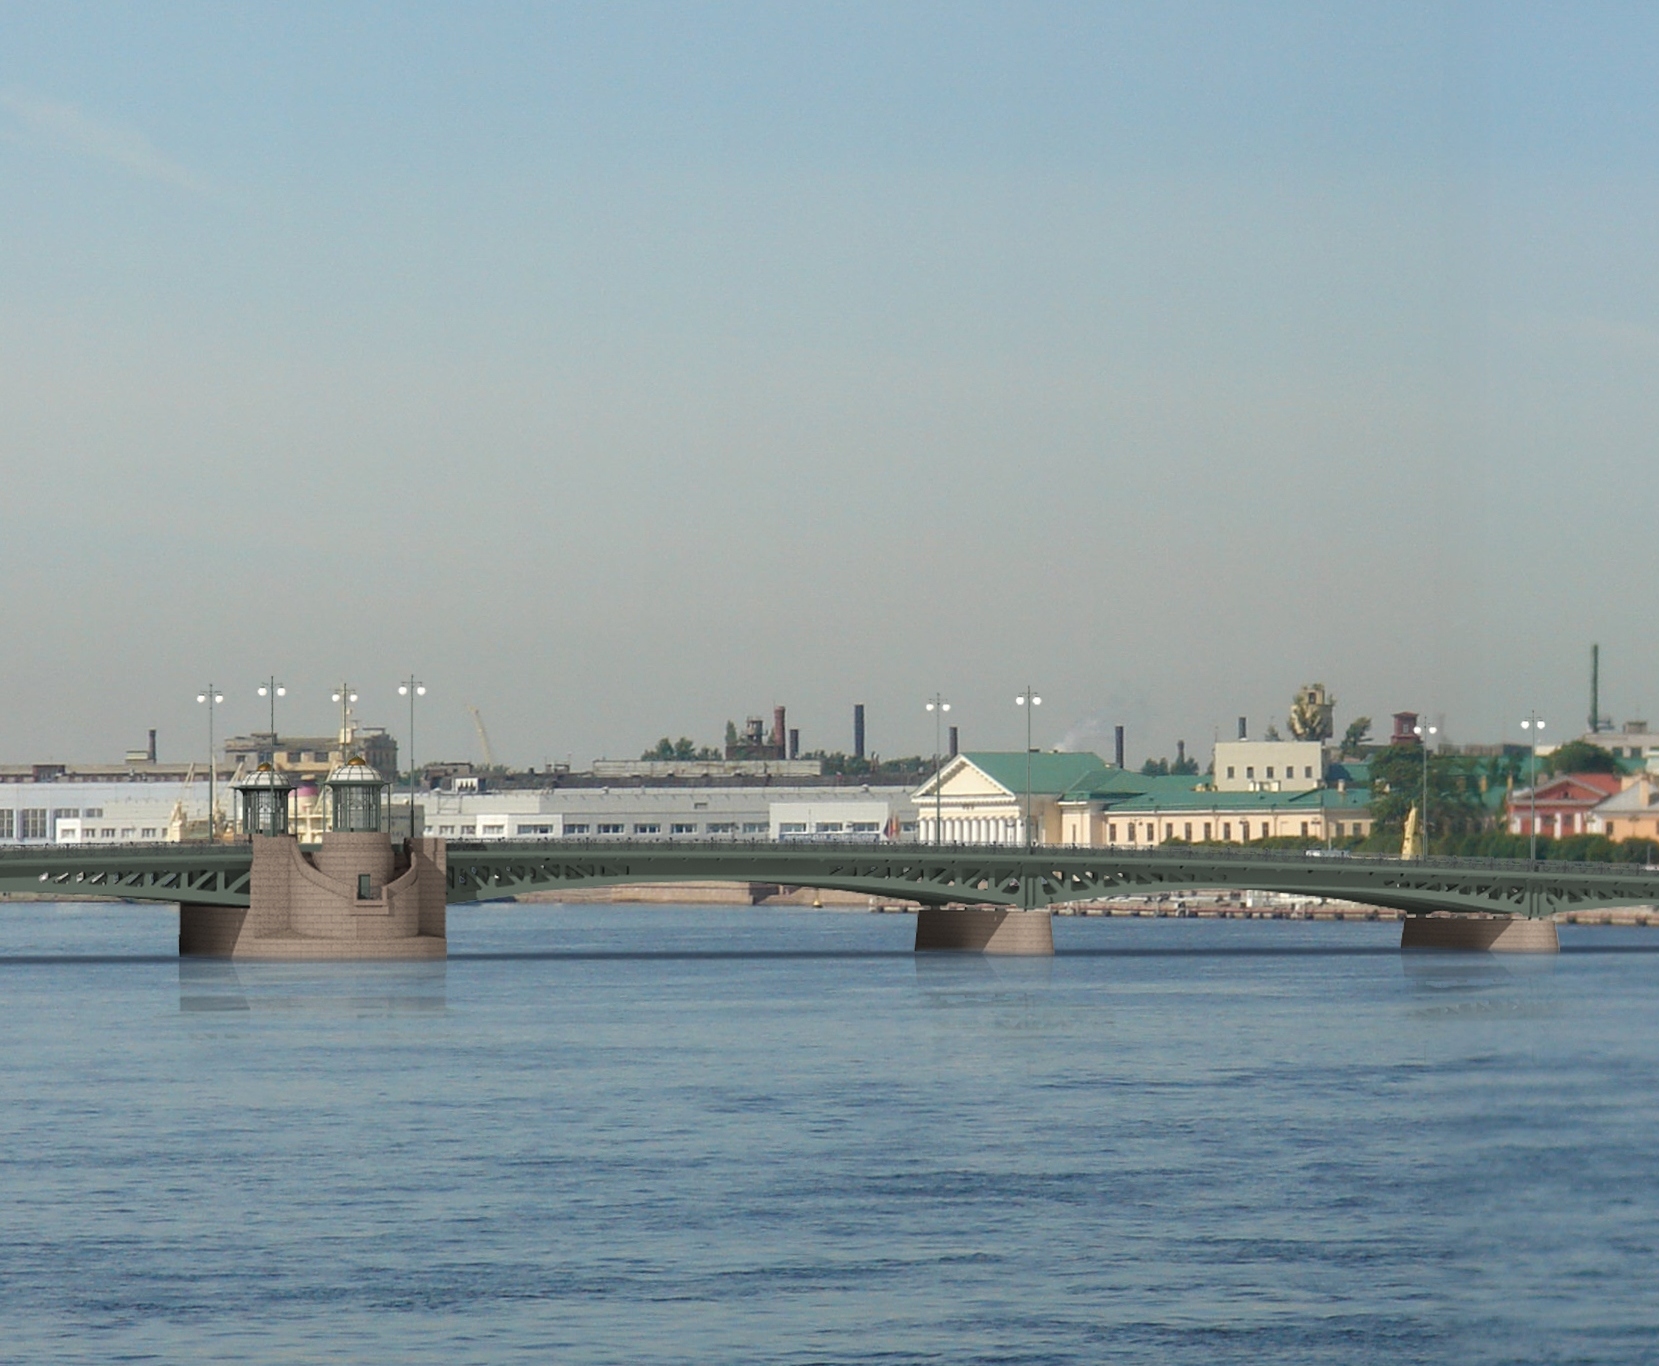 Novo-Admiralteysky bridge across the Big Neva River in the alignment of Lines 16-17 and 18-19